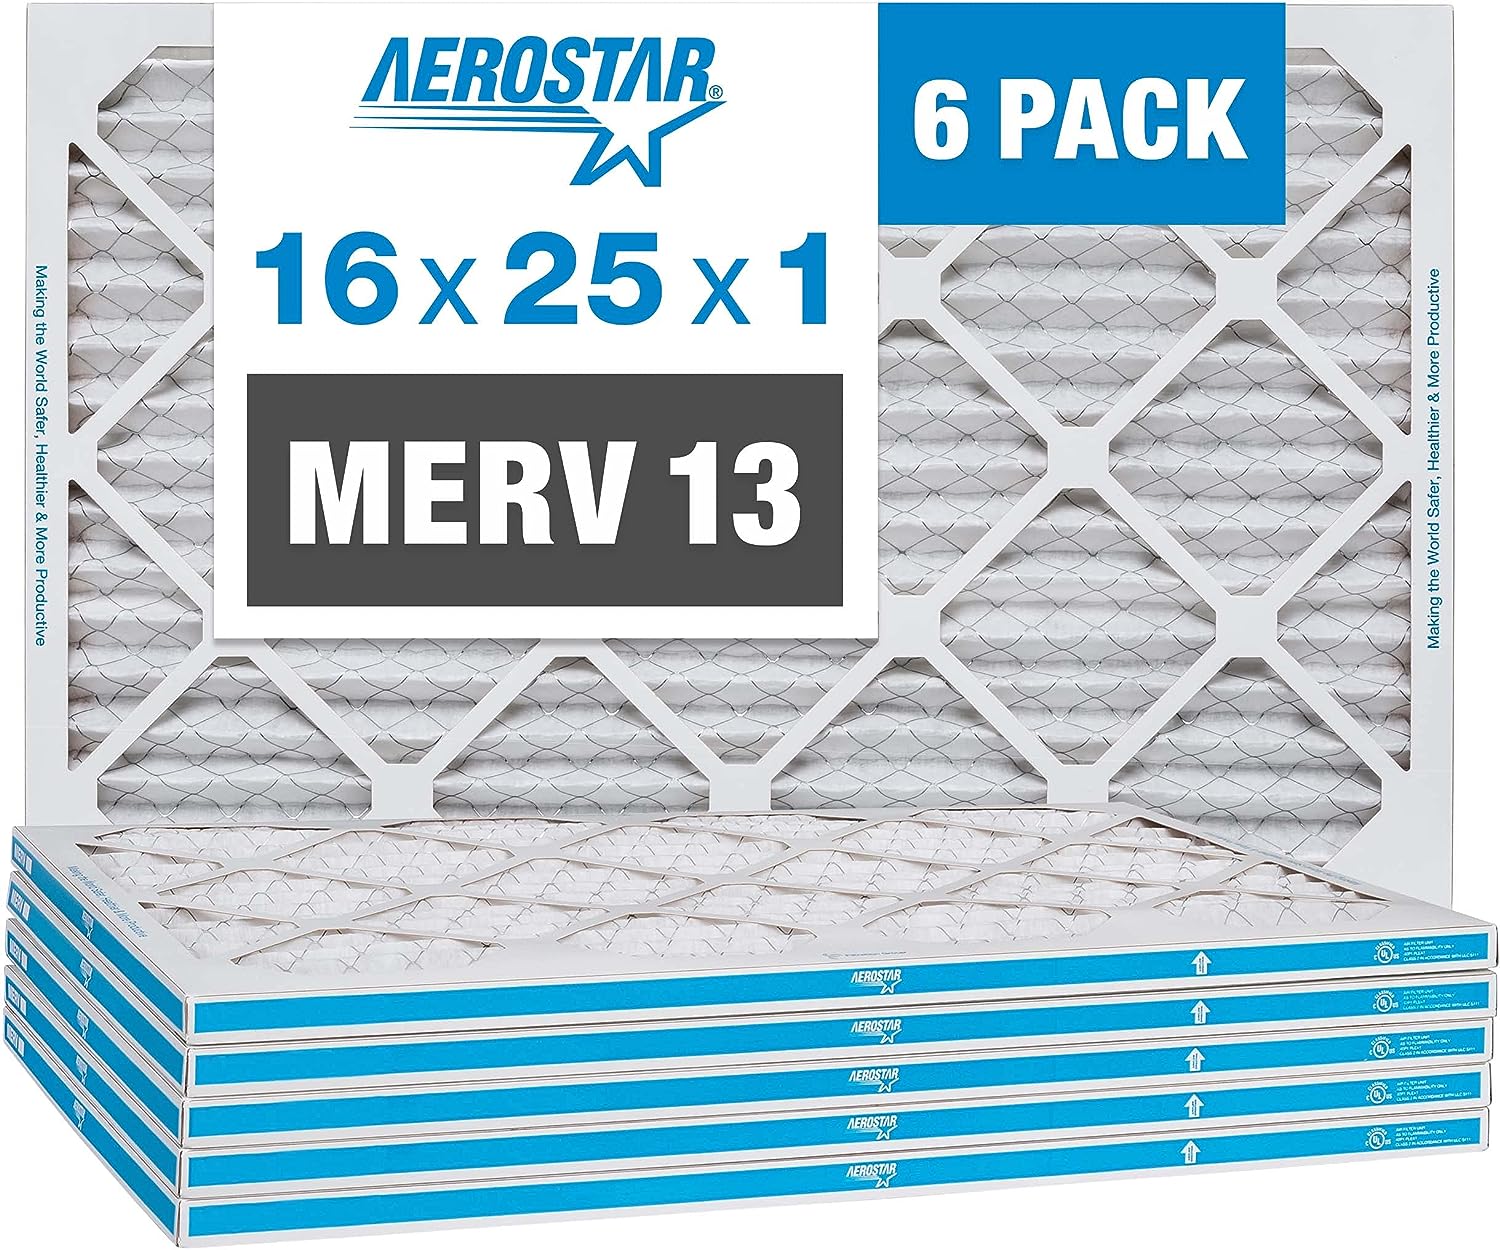 Aerostar 16x25x1 MERV 13 Pleated Air Filter, AC [...]